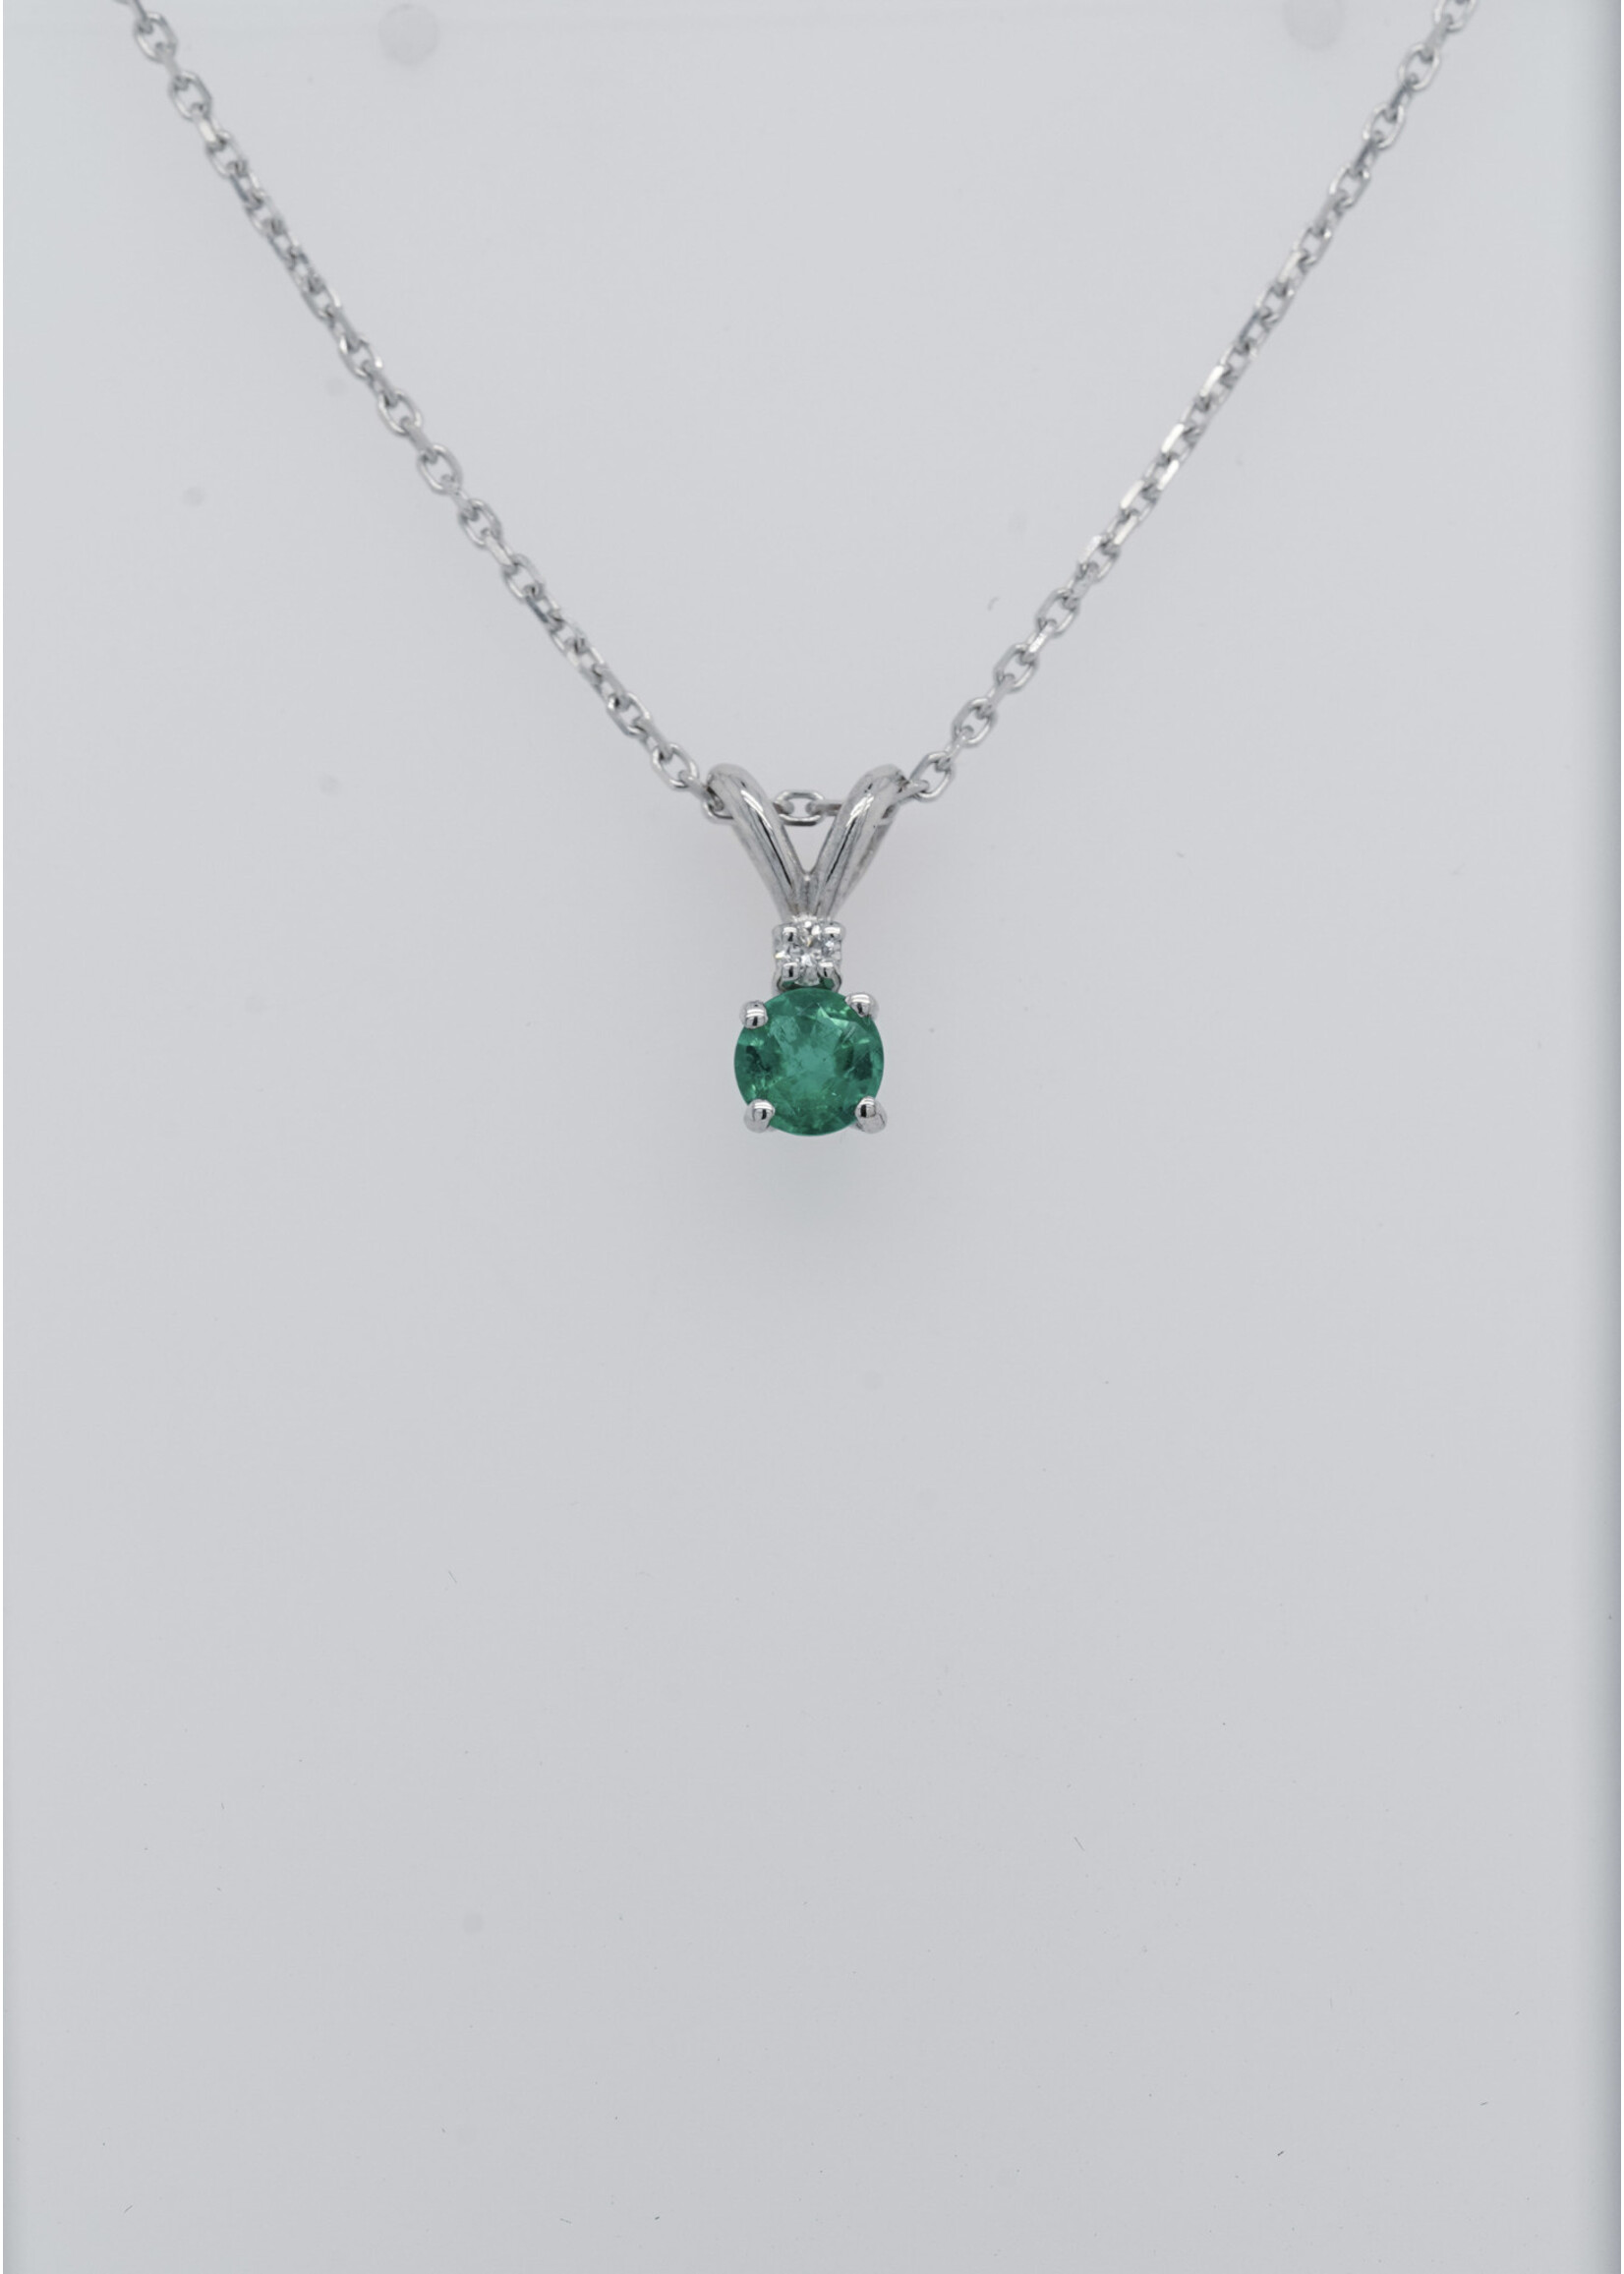 14KW 2.07g .26ctw Emerald & Diamond Necklace 18"